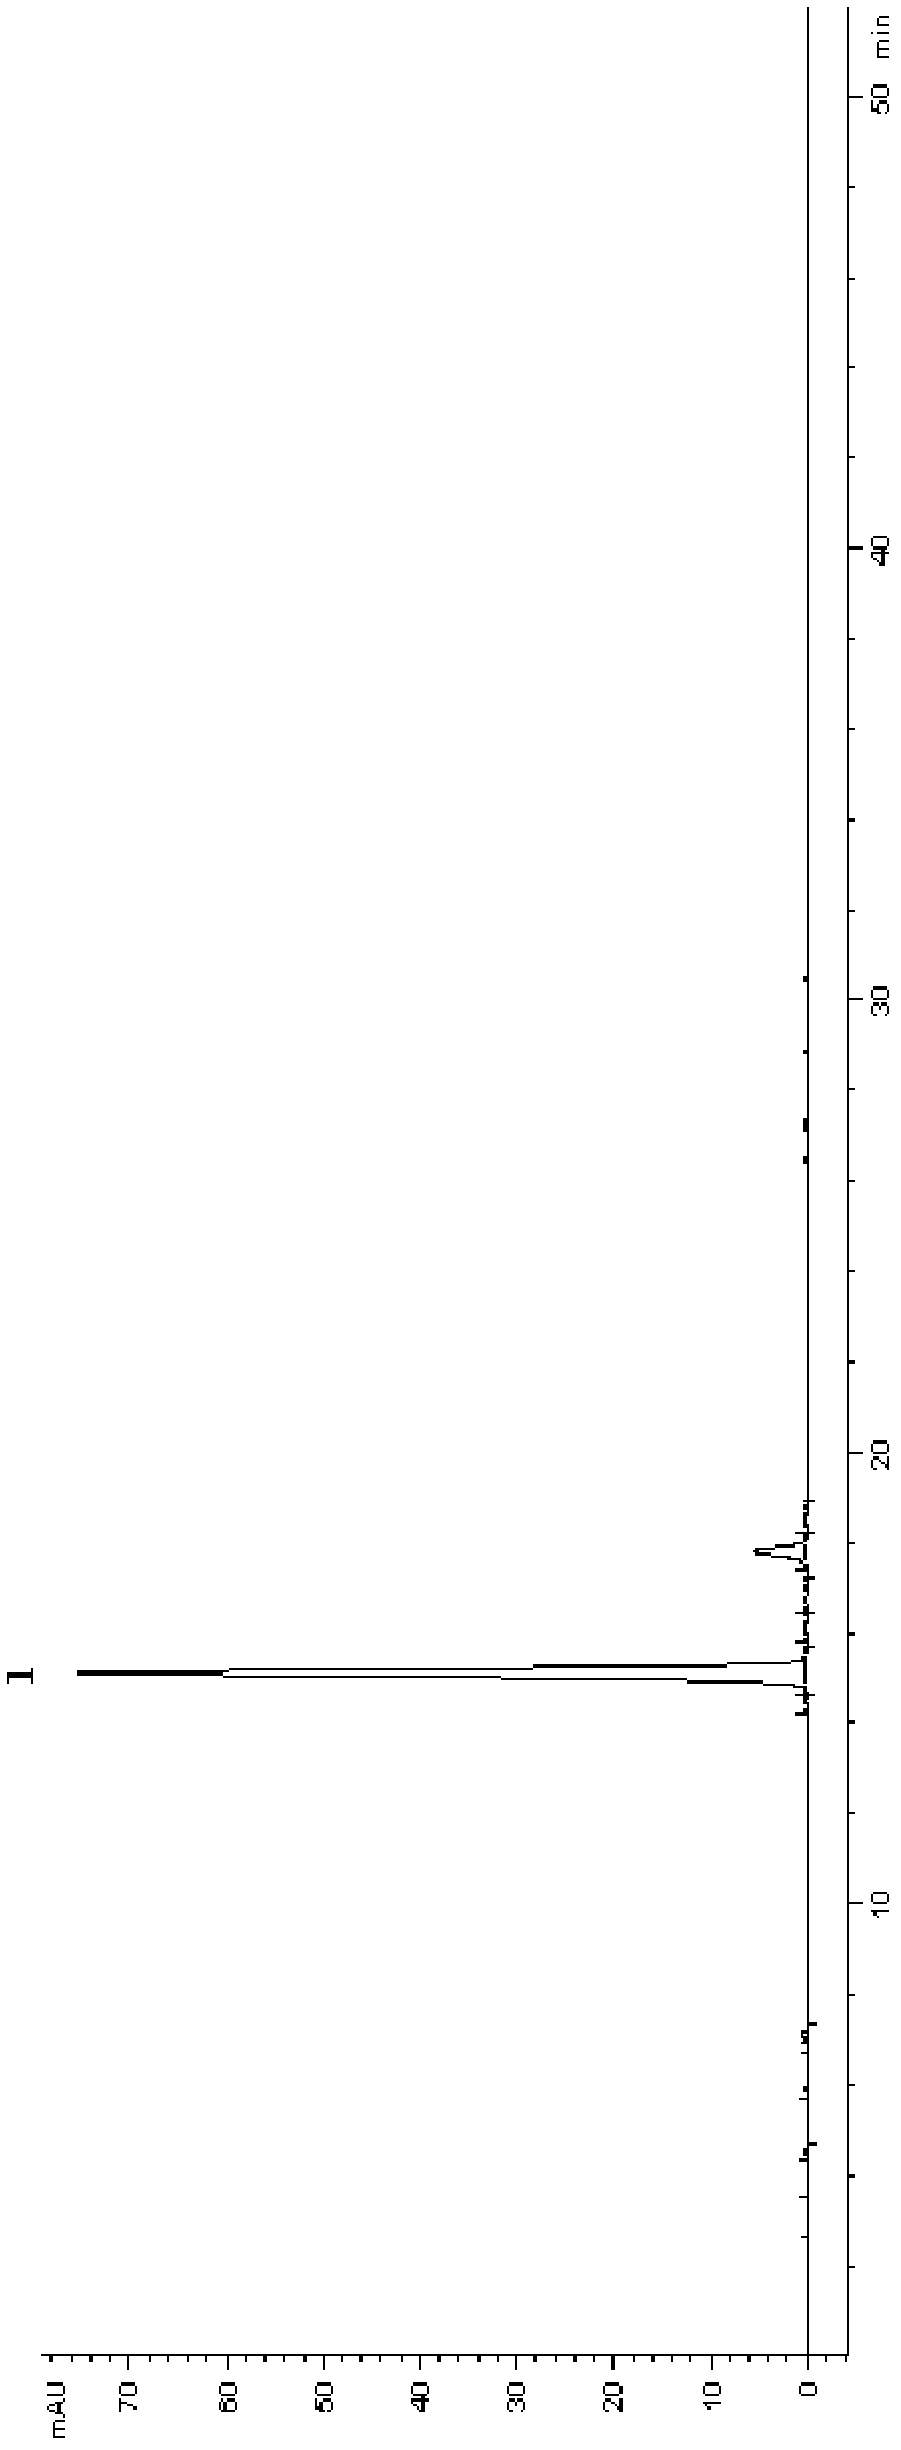 Purification method of rhubarb stilbene glucoside